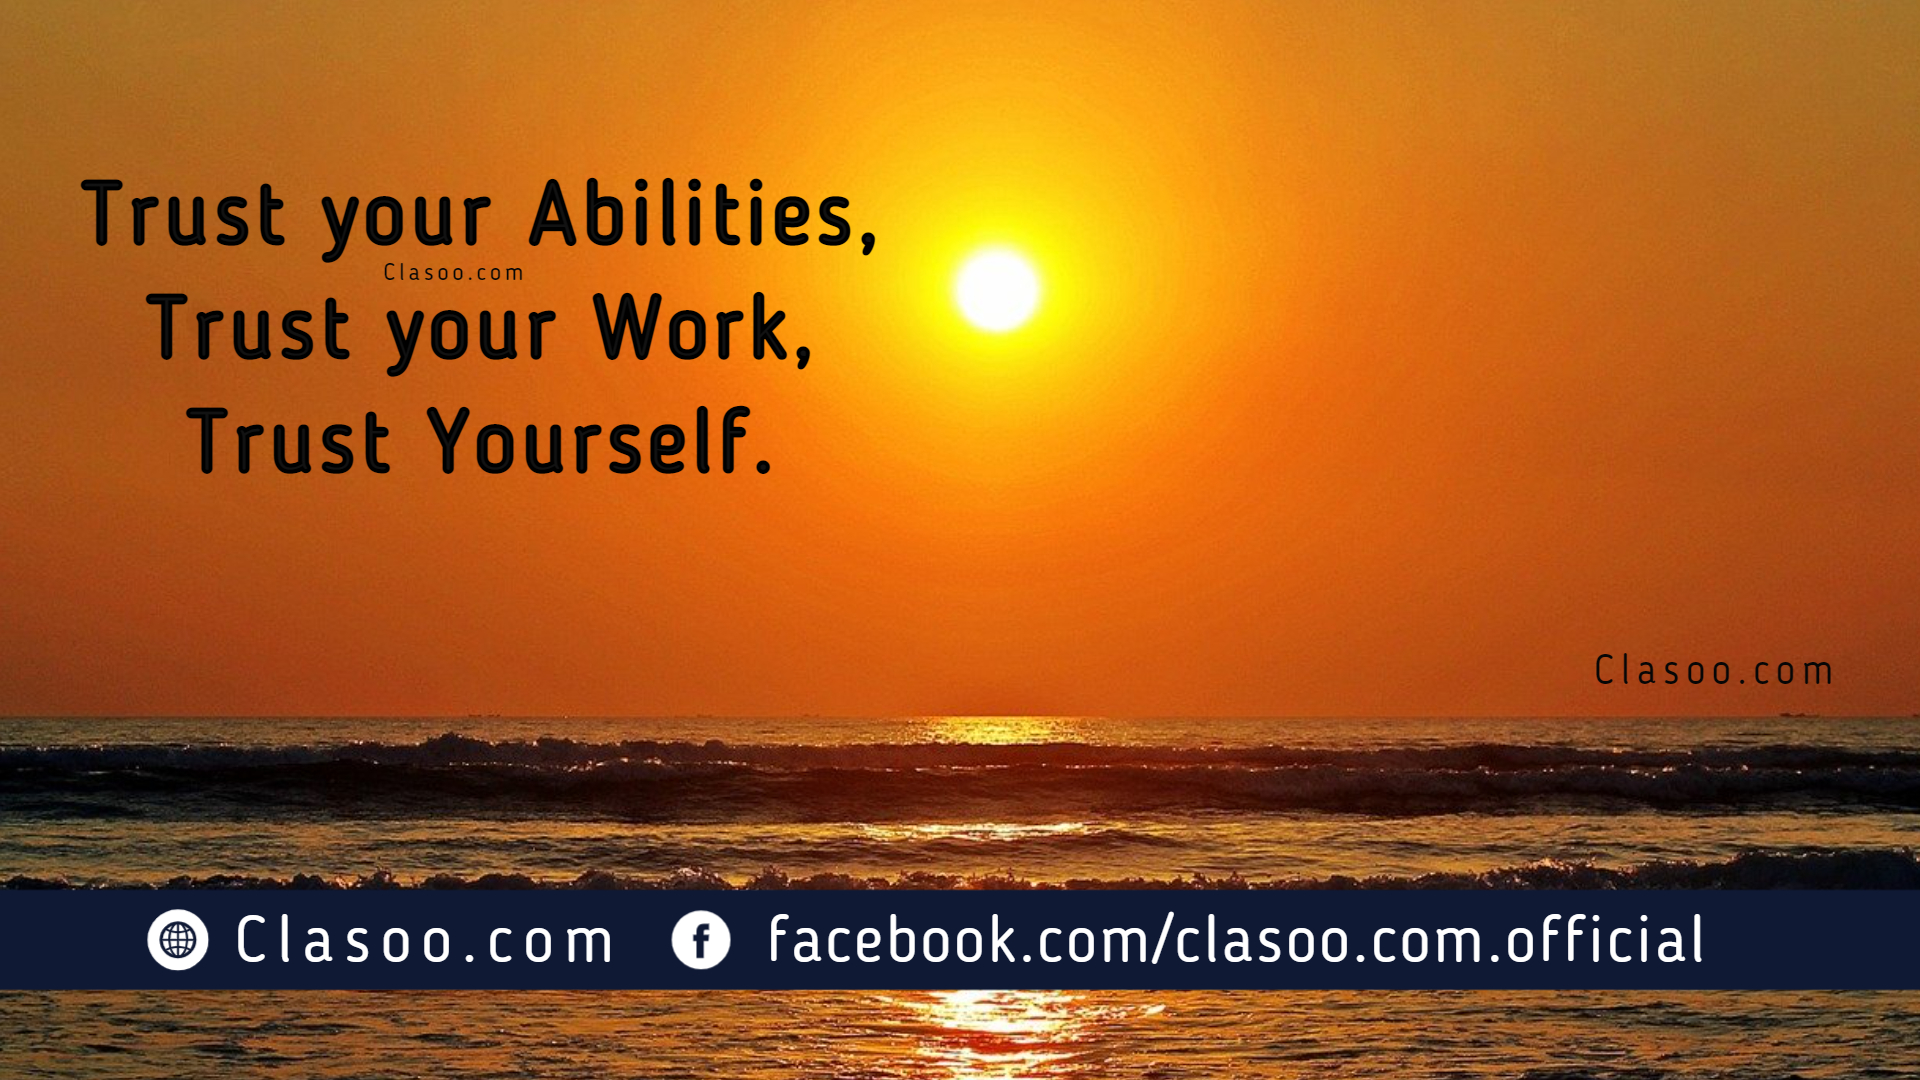 Trust your Abilities, Trust your work, Trust yourself.